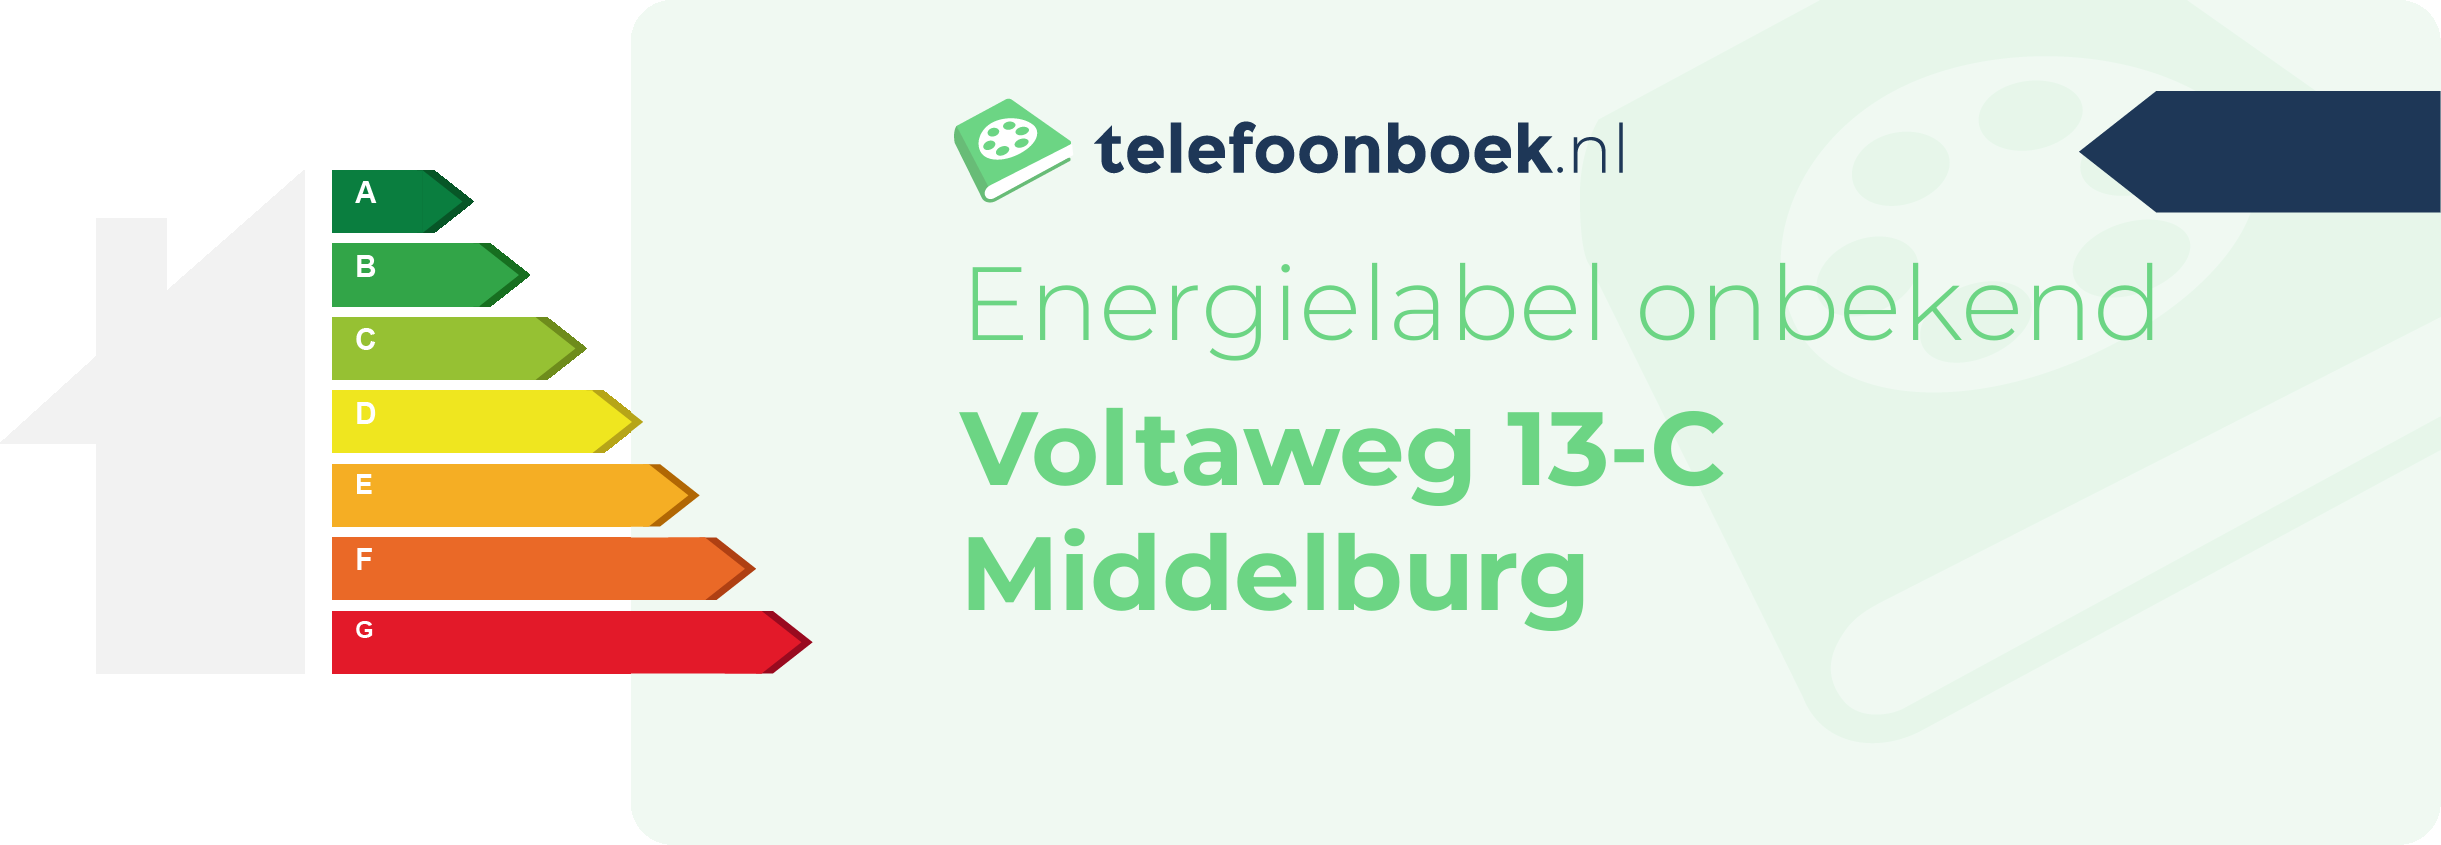 Energielabel Voltaweg 13-C Middelburg